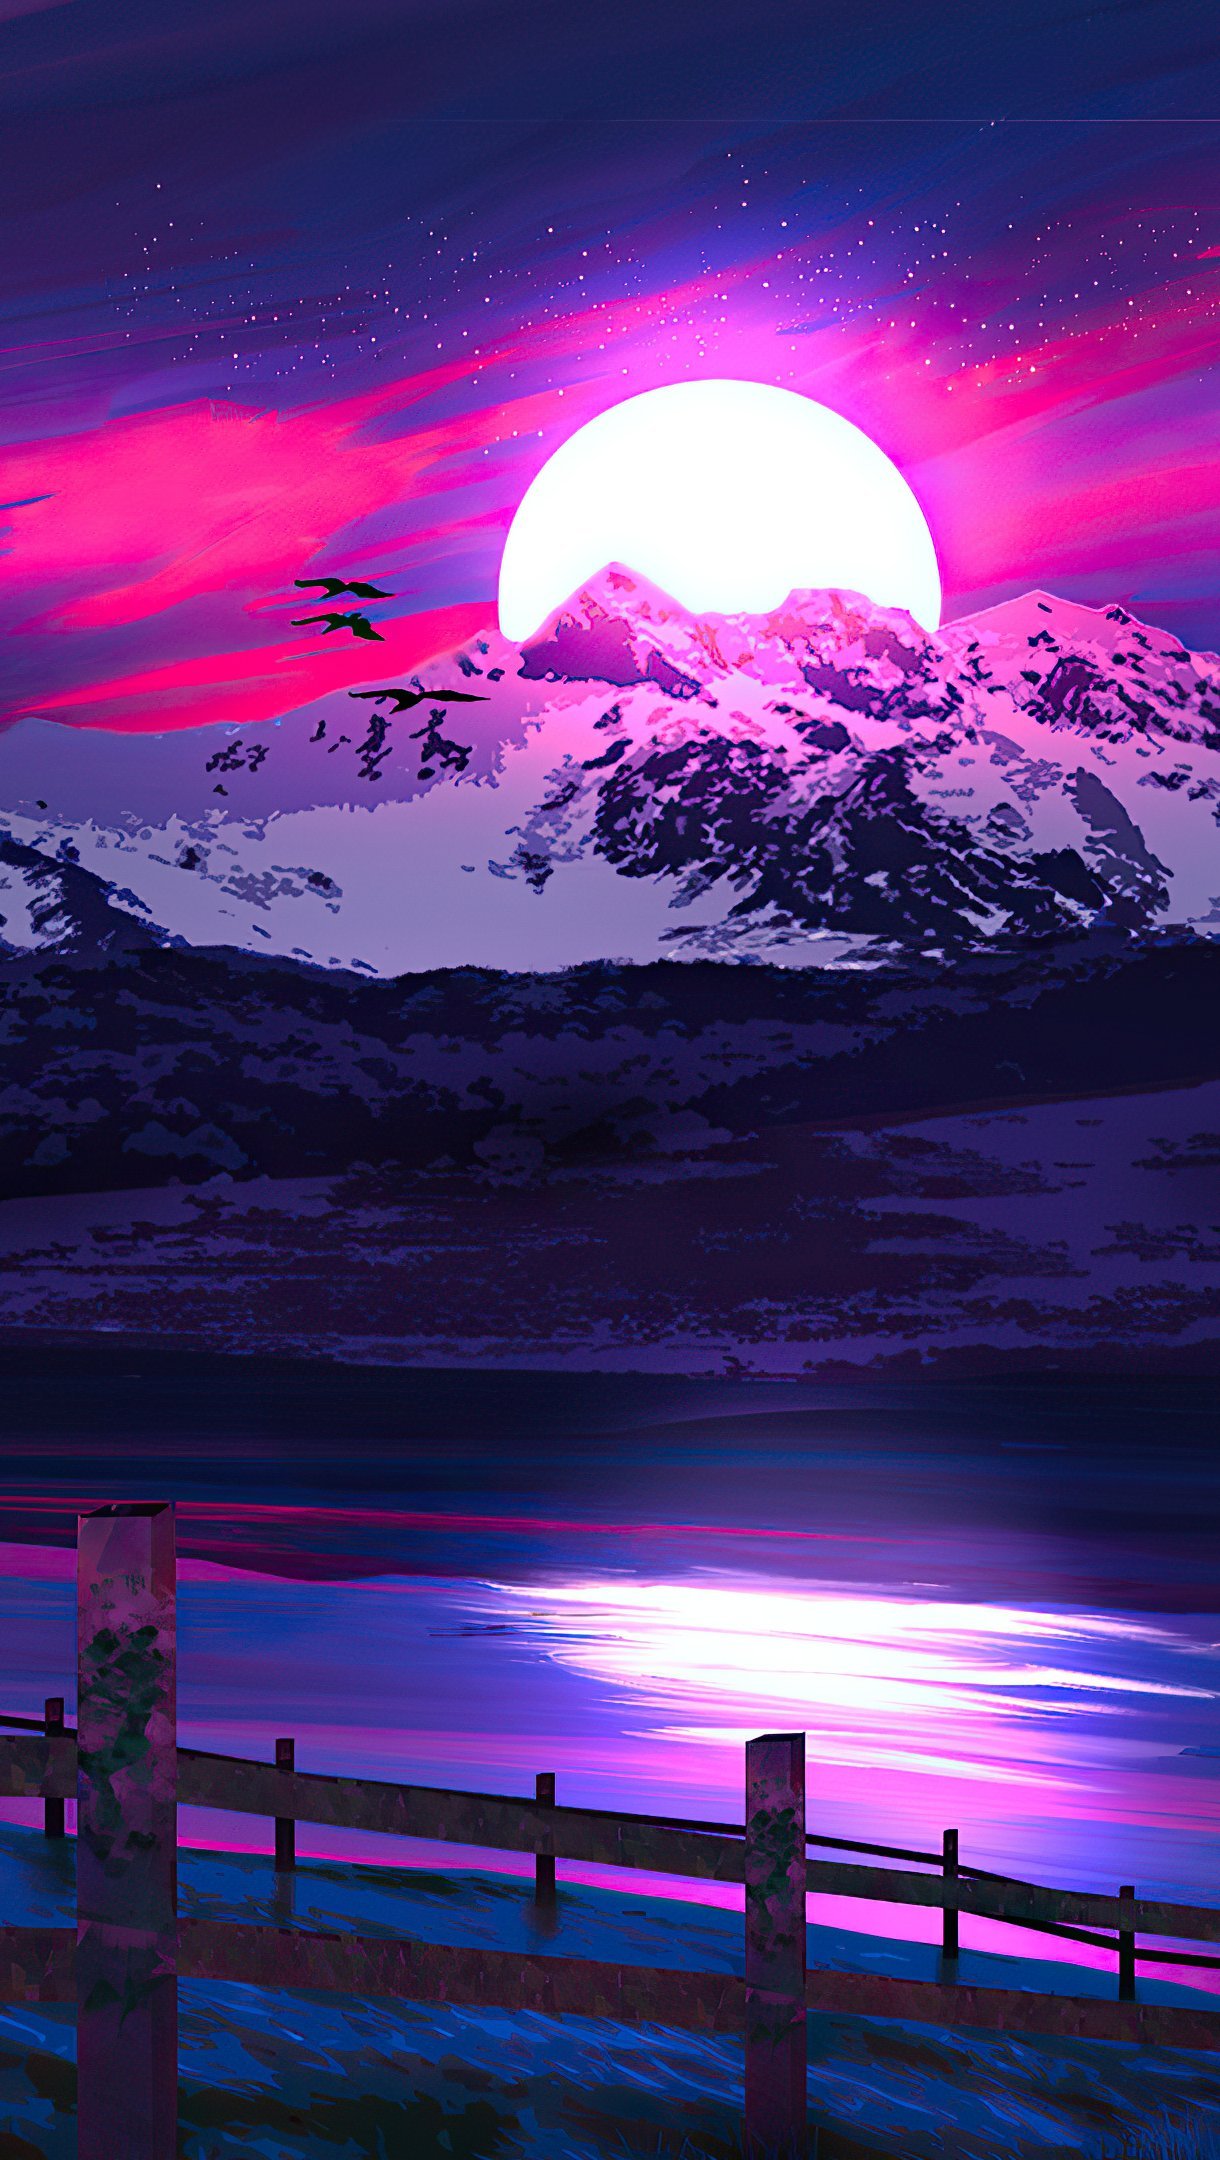 Digital Landscape At Sunset Wallpaper 4K Hd Id:5846